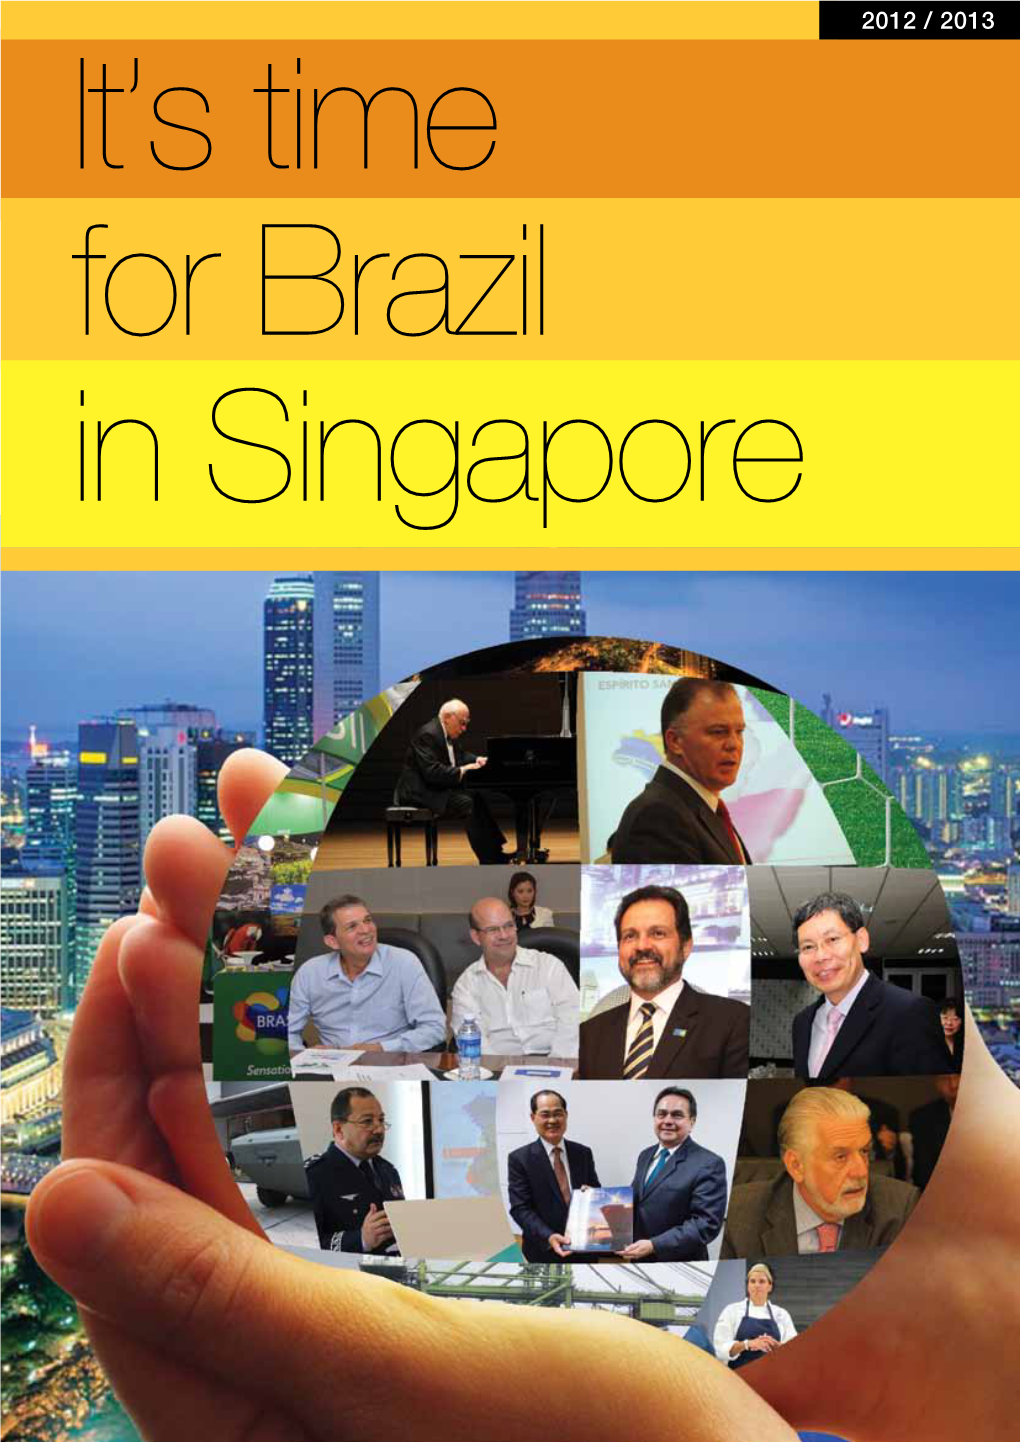 Brazil in Singapore Builder of Distinction